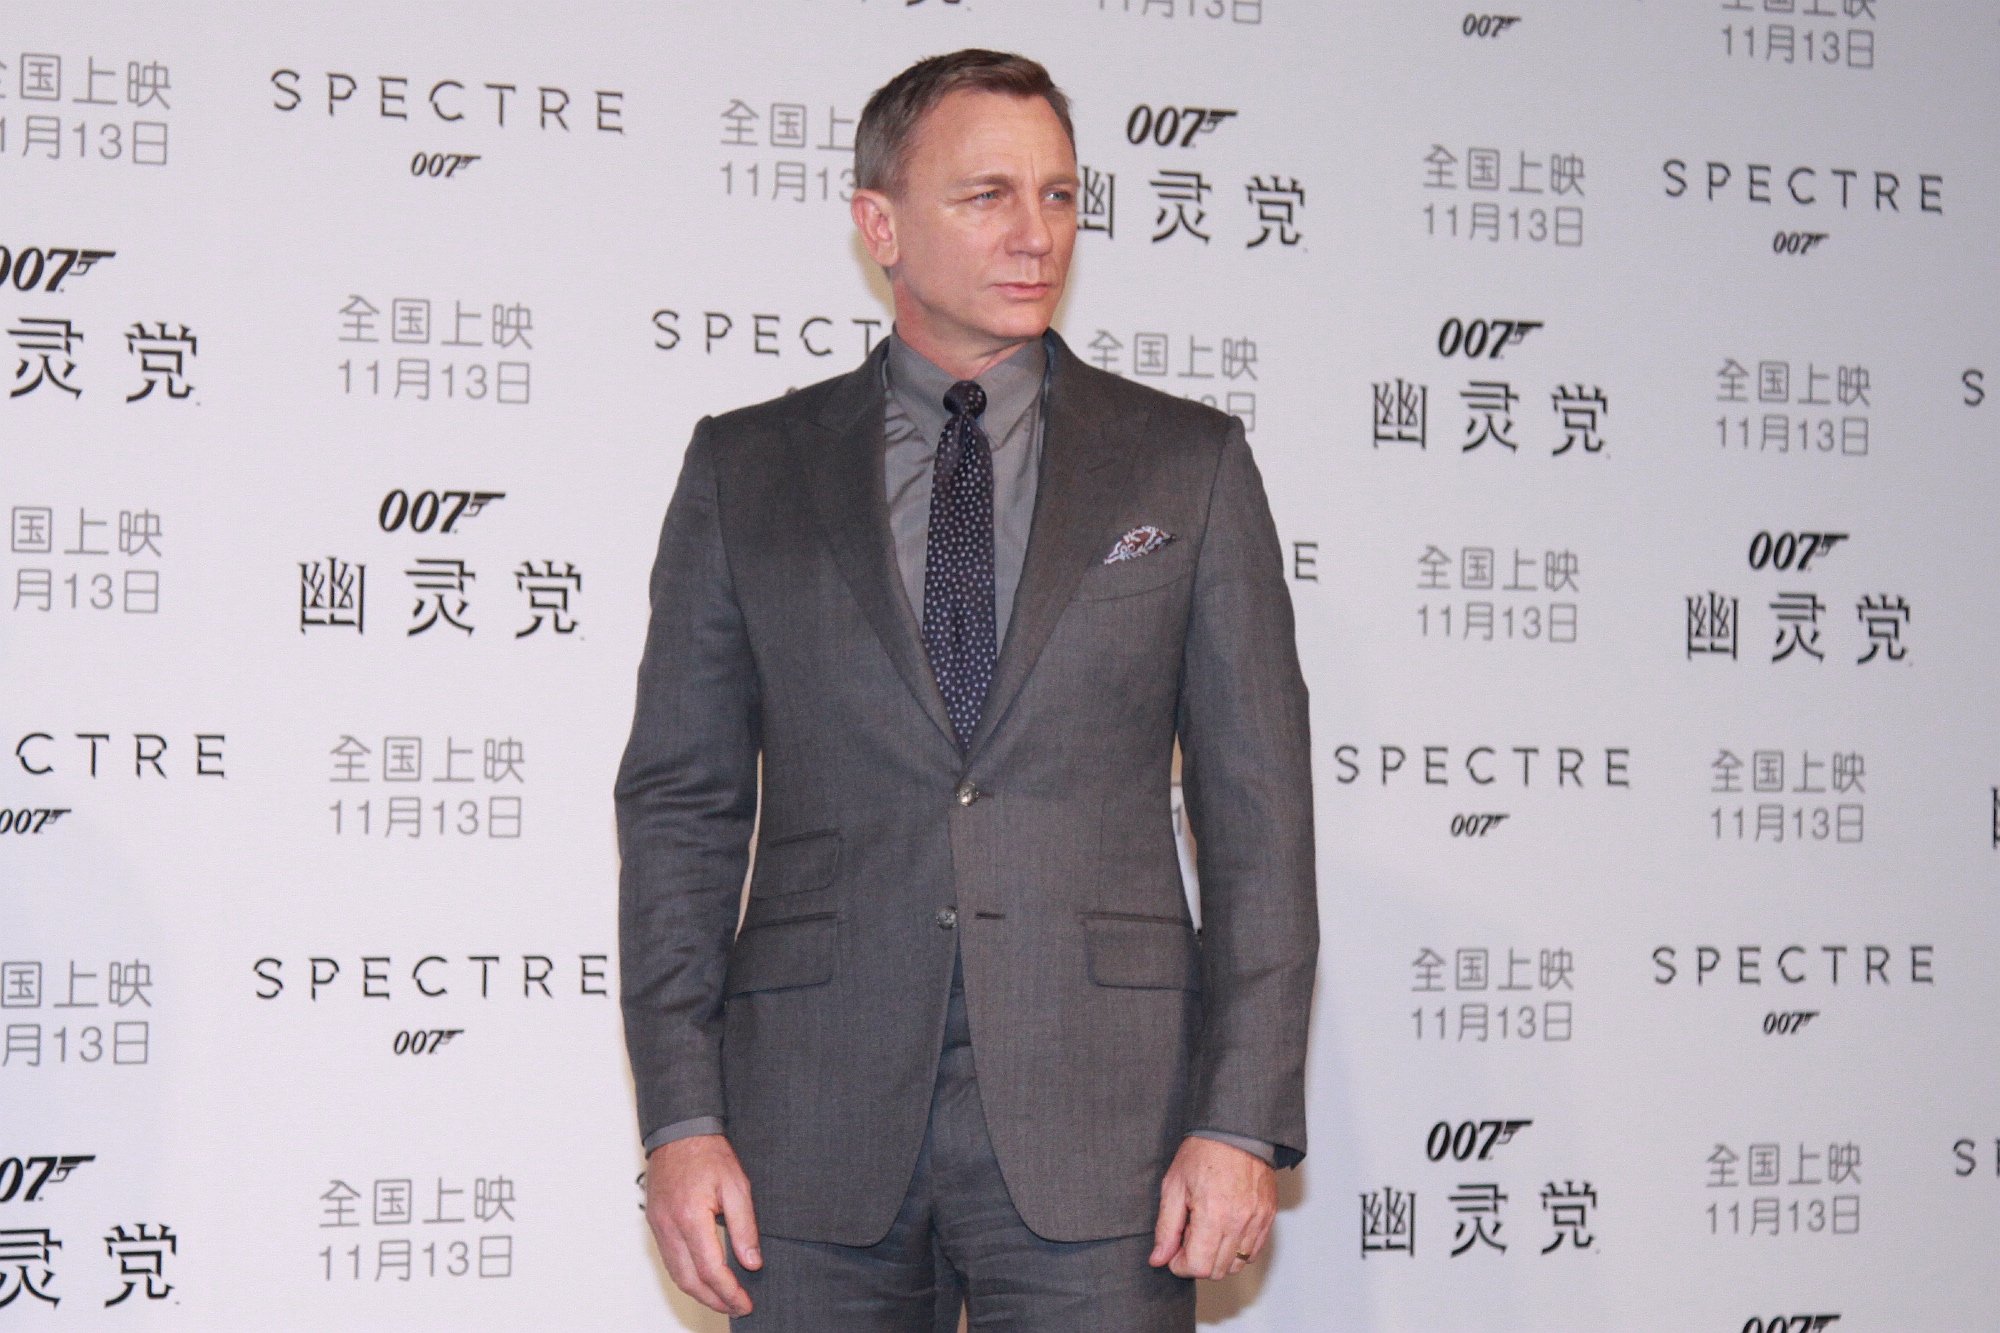 'No Time to Die' James Bond actor Daniel Craig promoting 'Spectre'